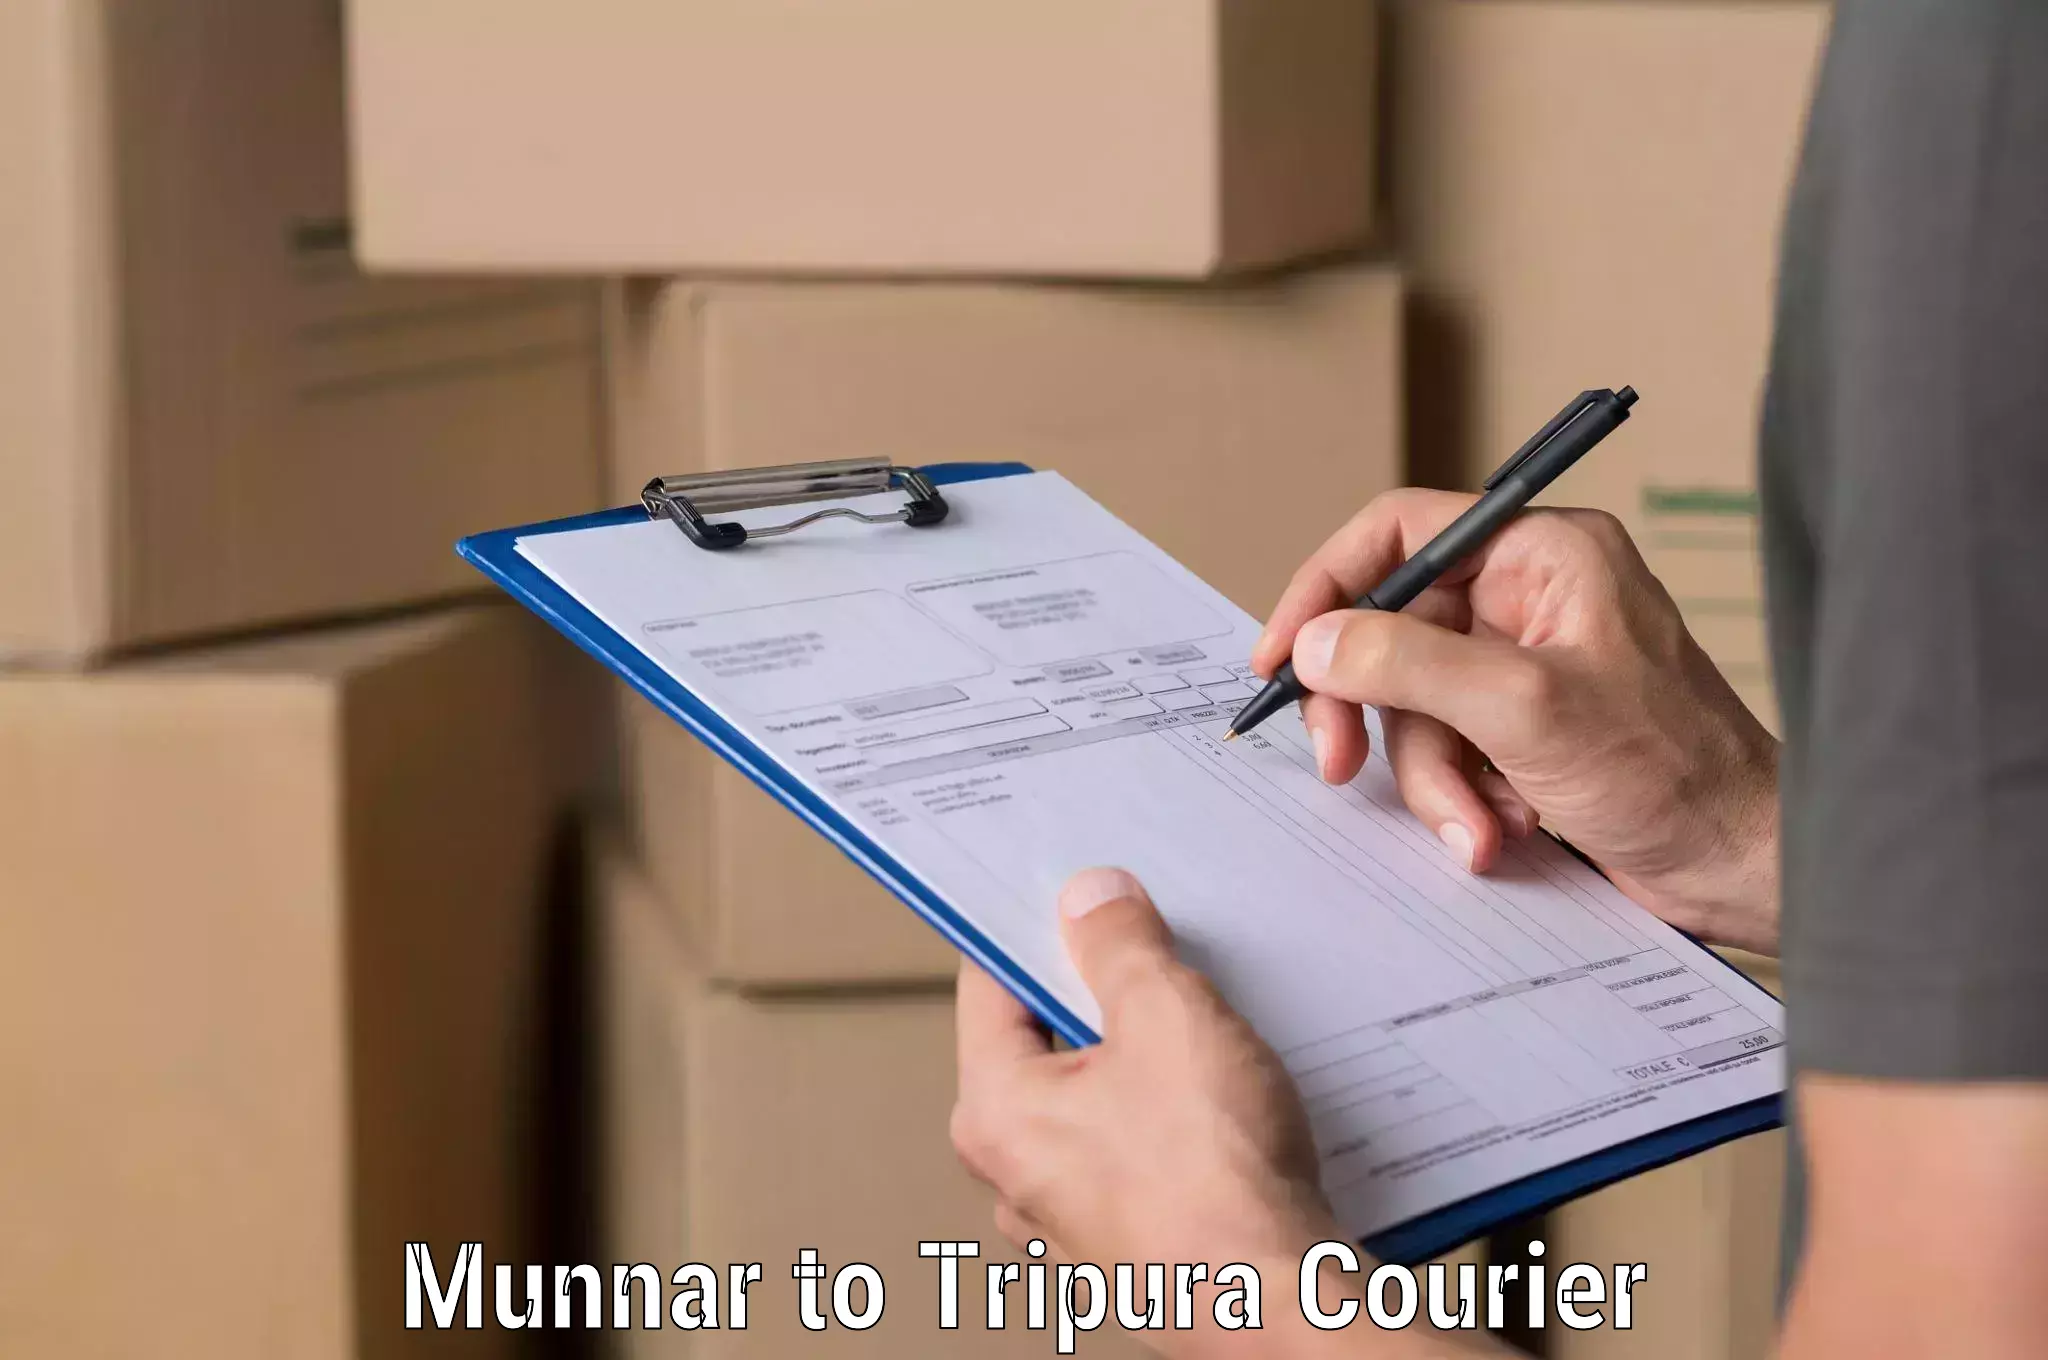 Advanced shipping technology Munnar to Manughat